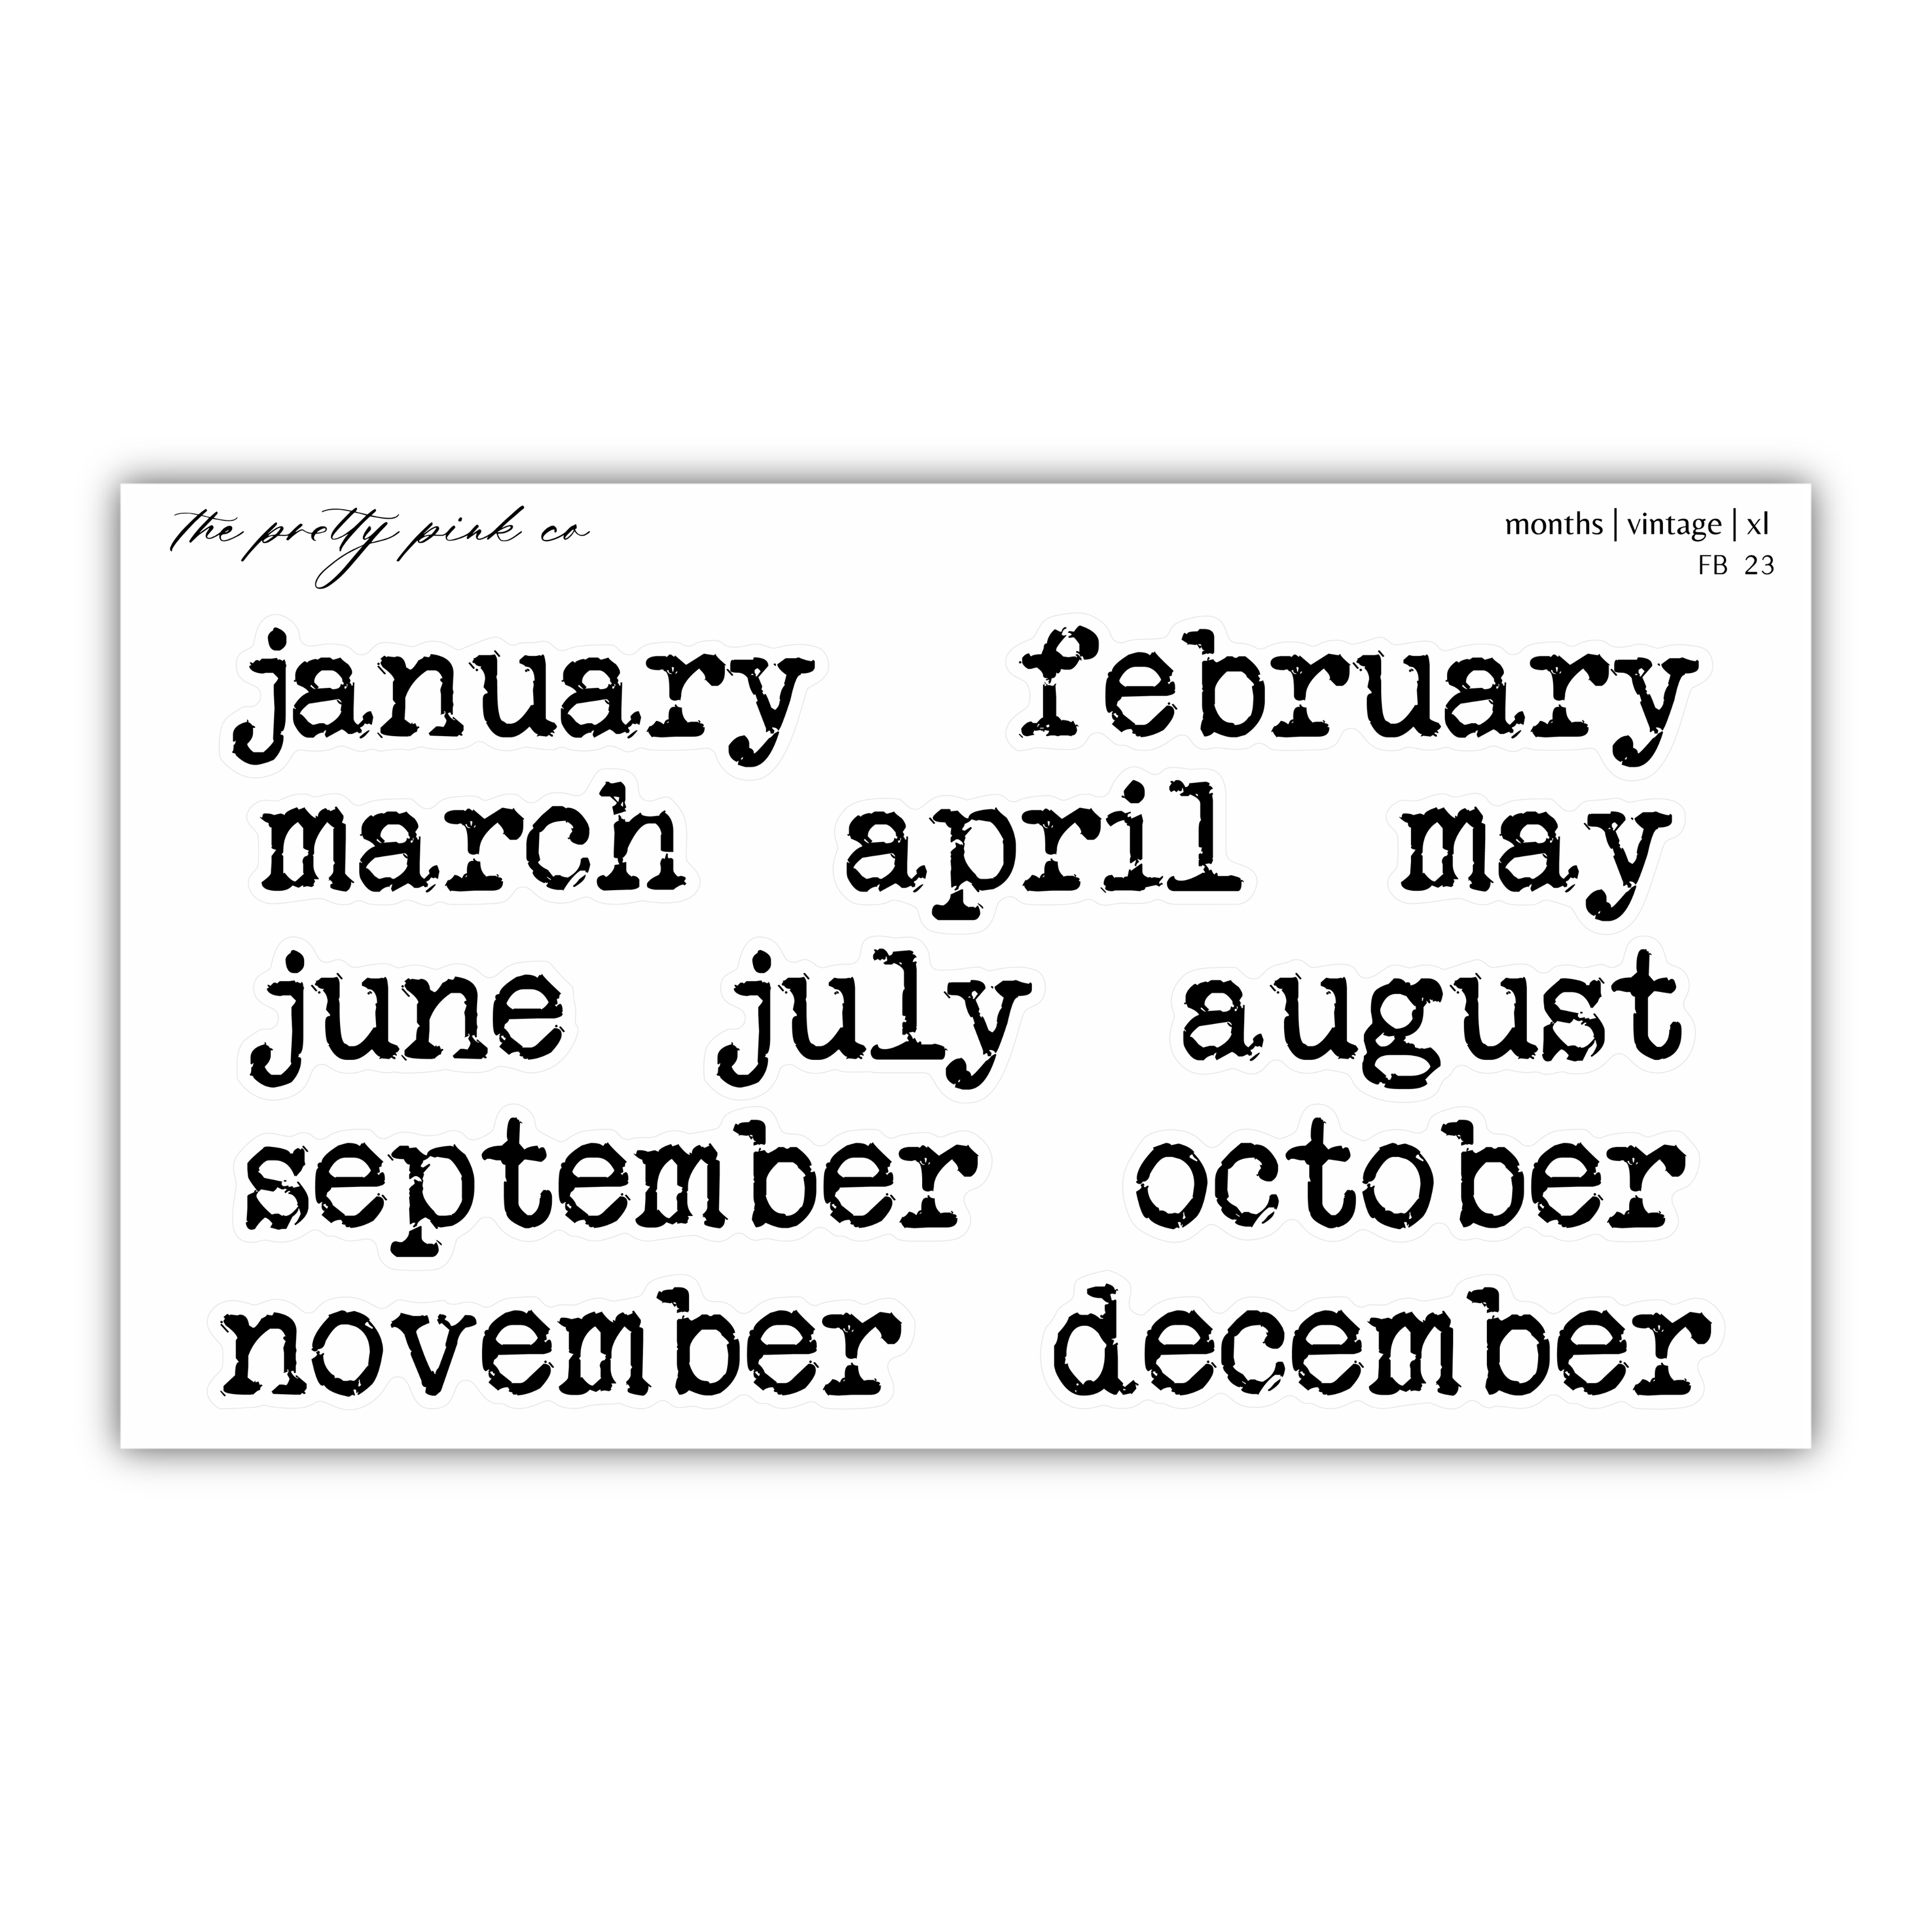 a black and white photo of a calendar